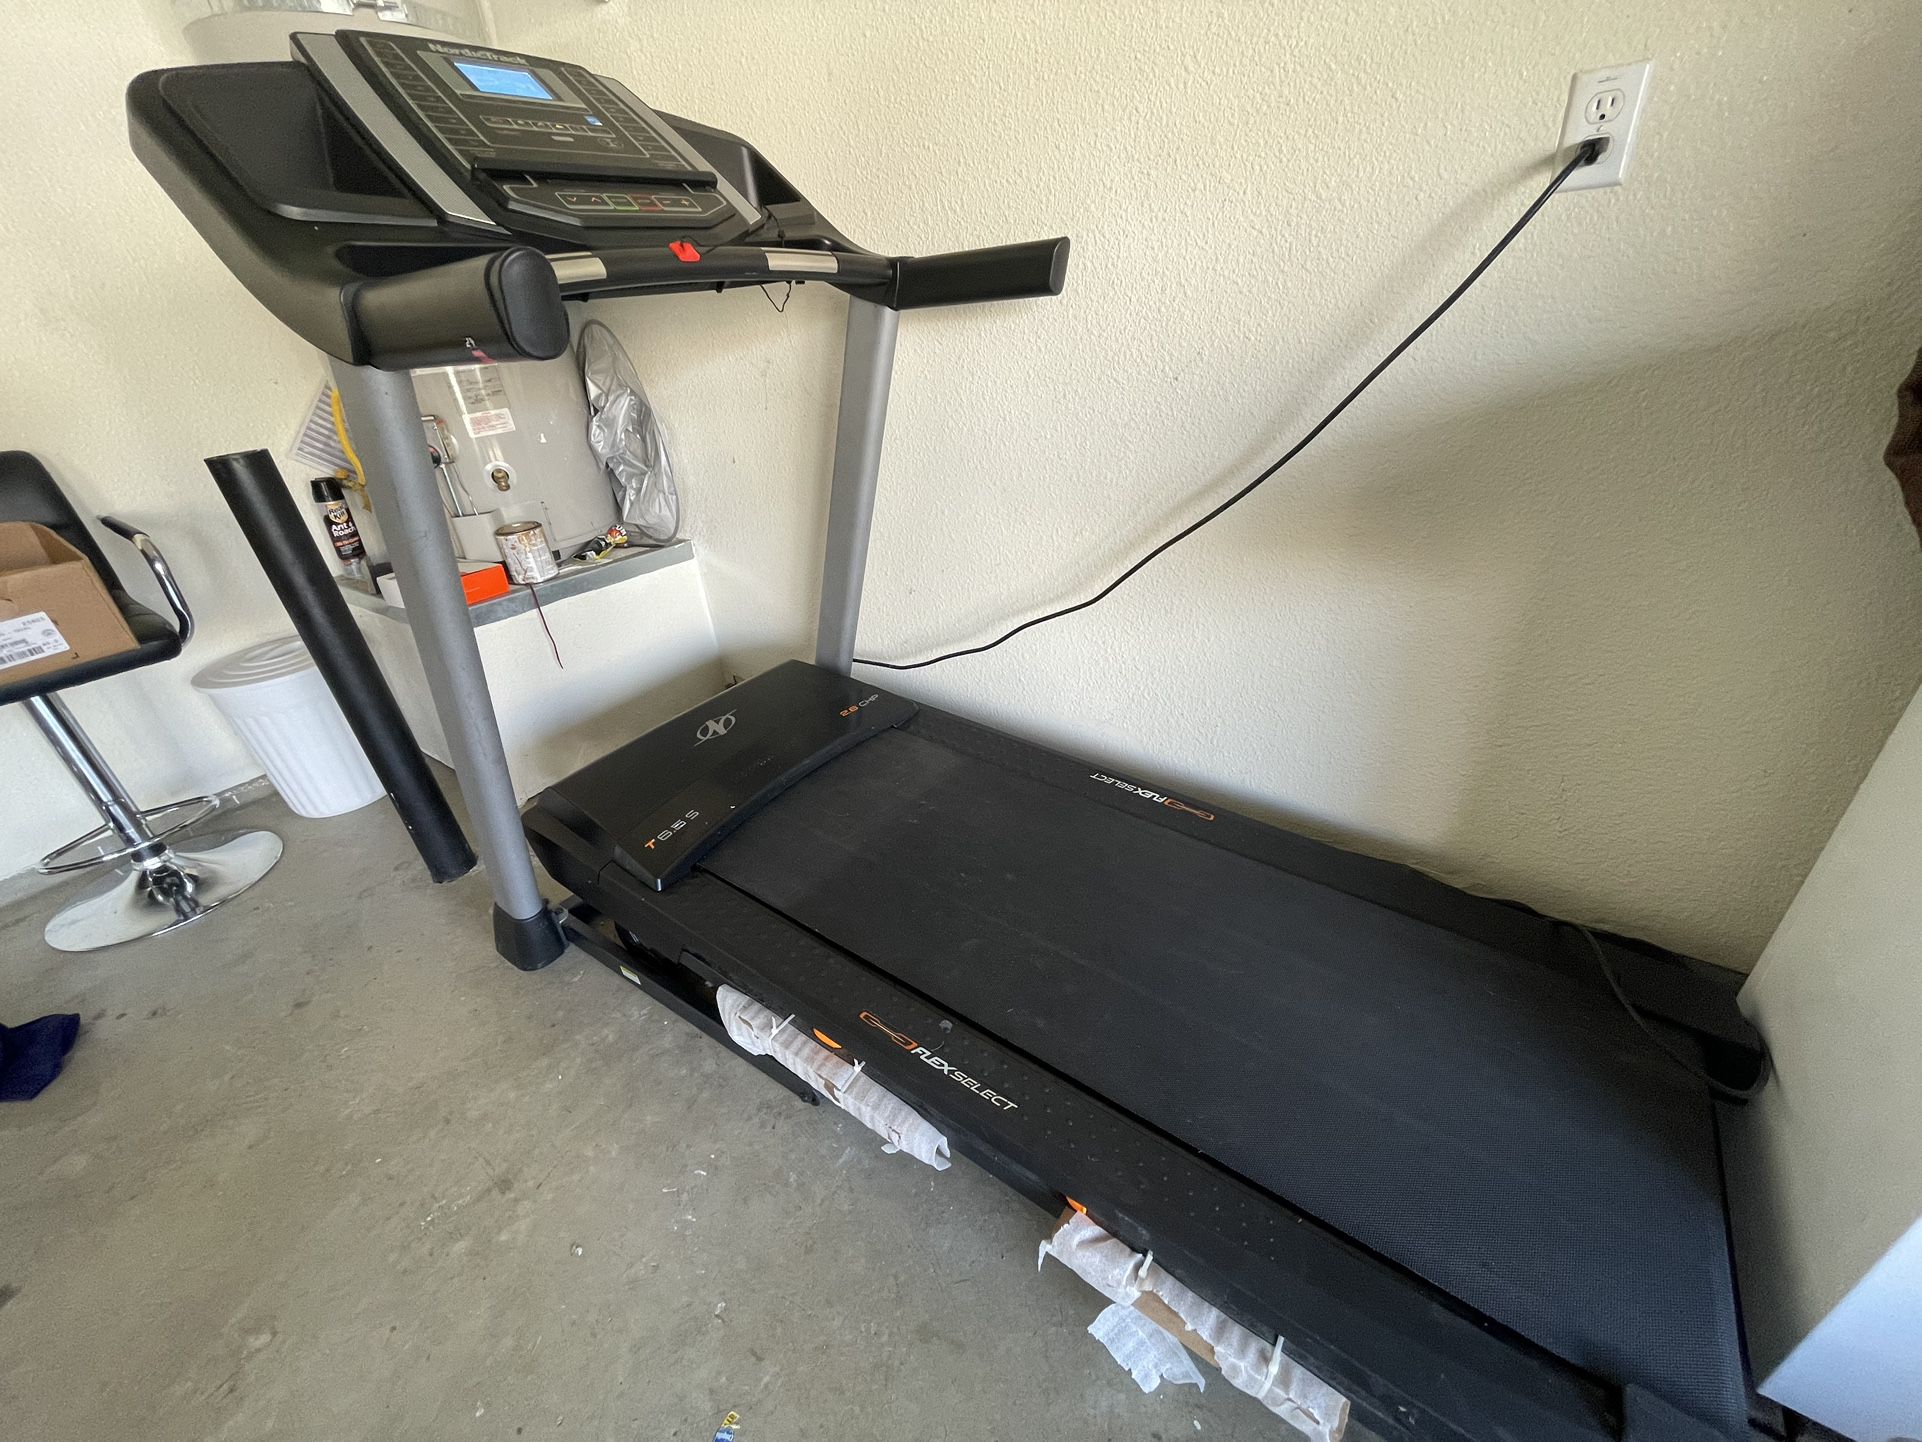 NordicTrack T Series 6.5S Treadmill Black Gray Treadmill